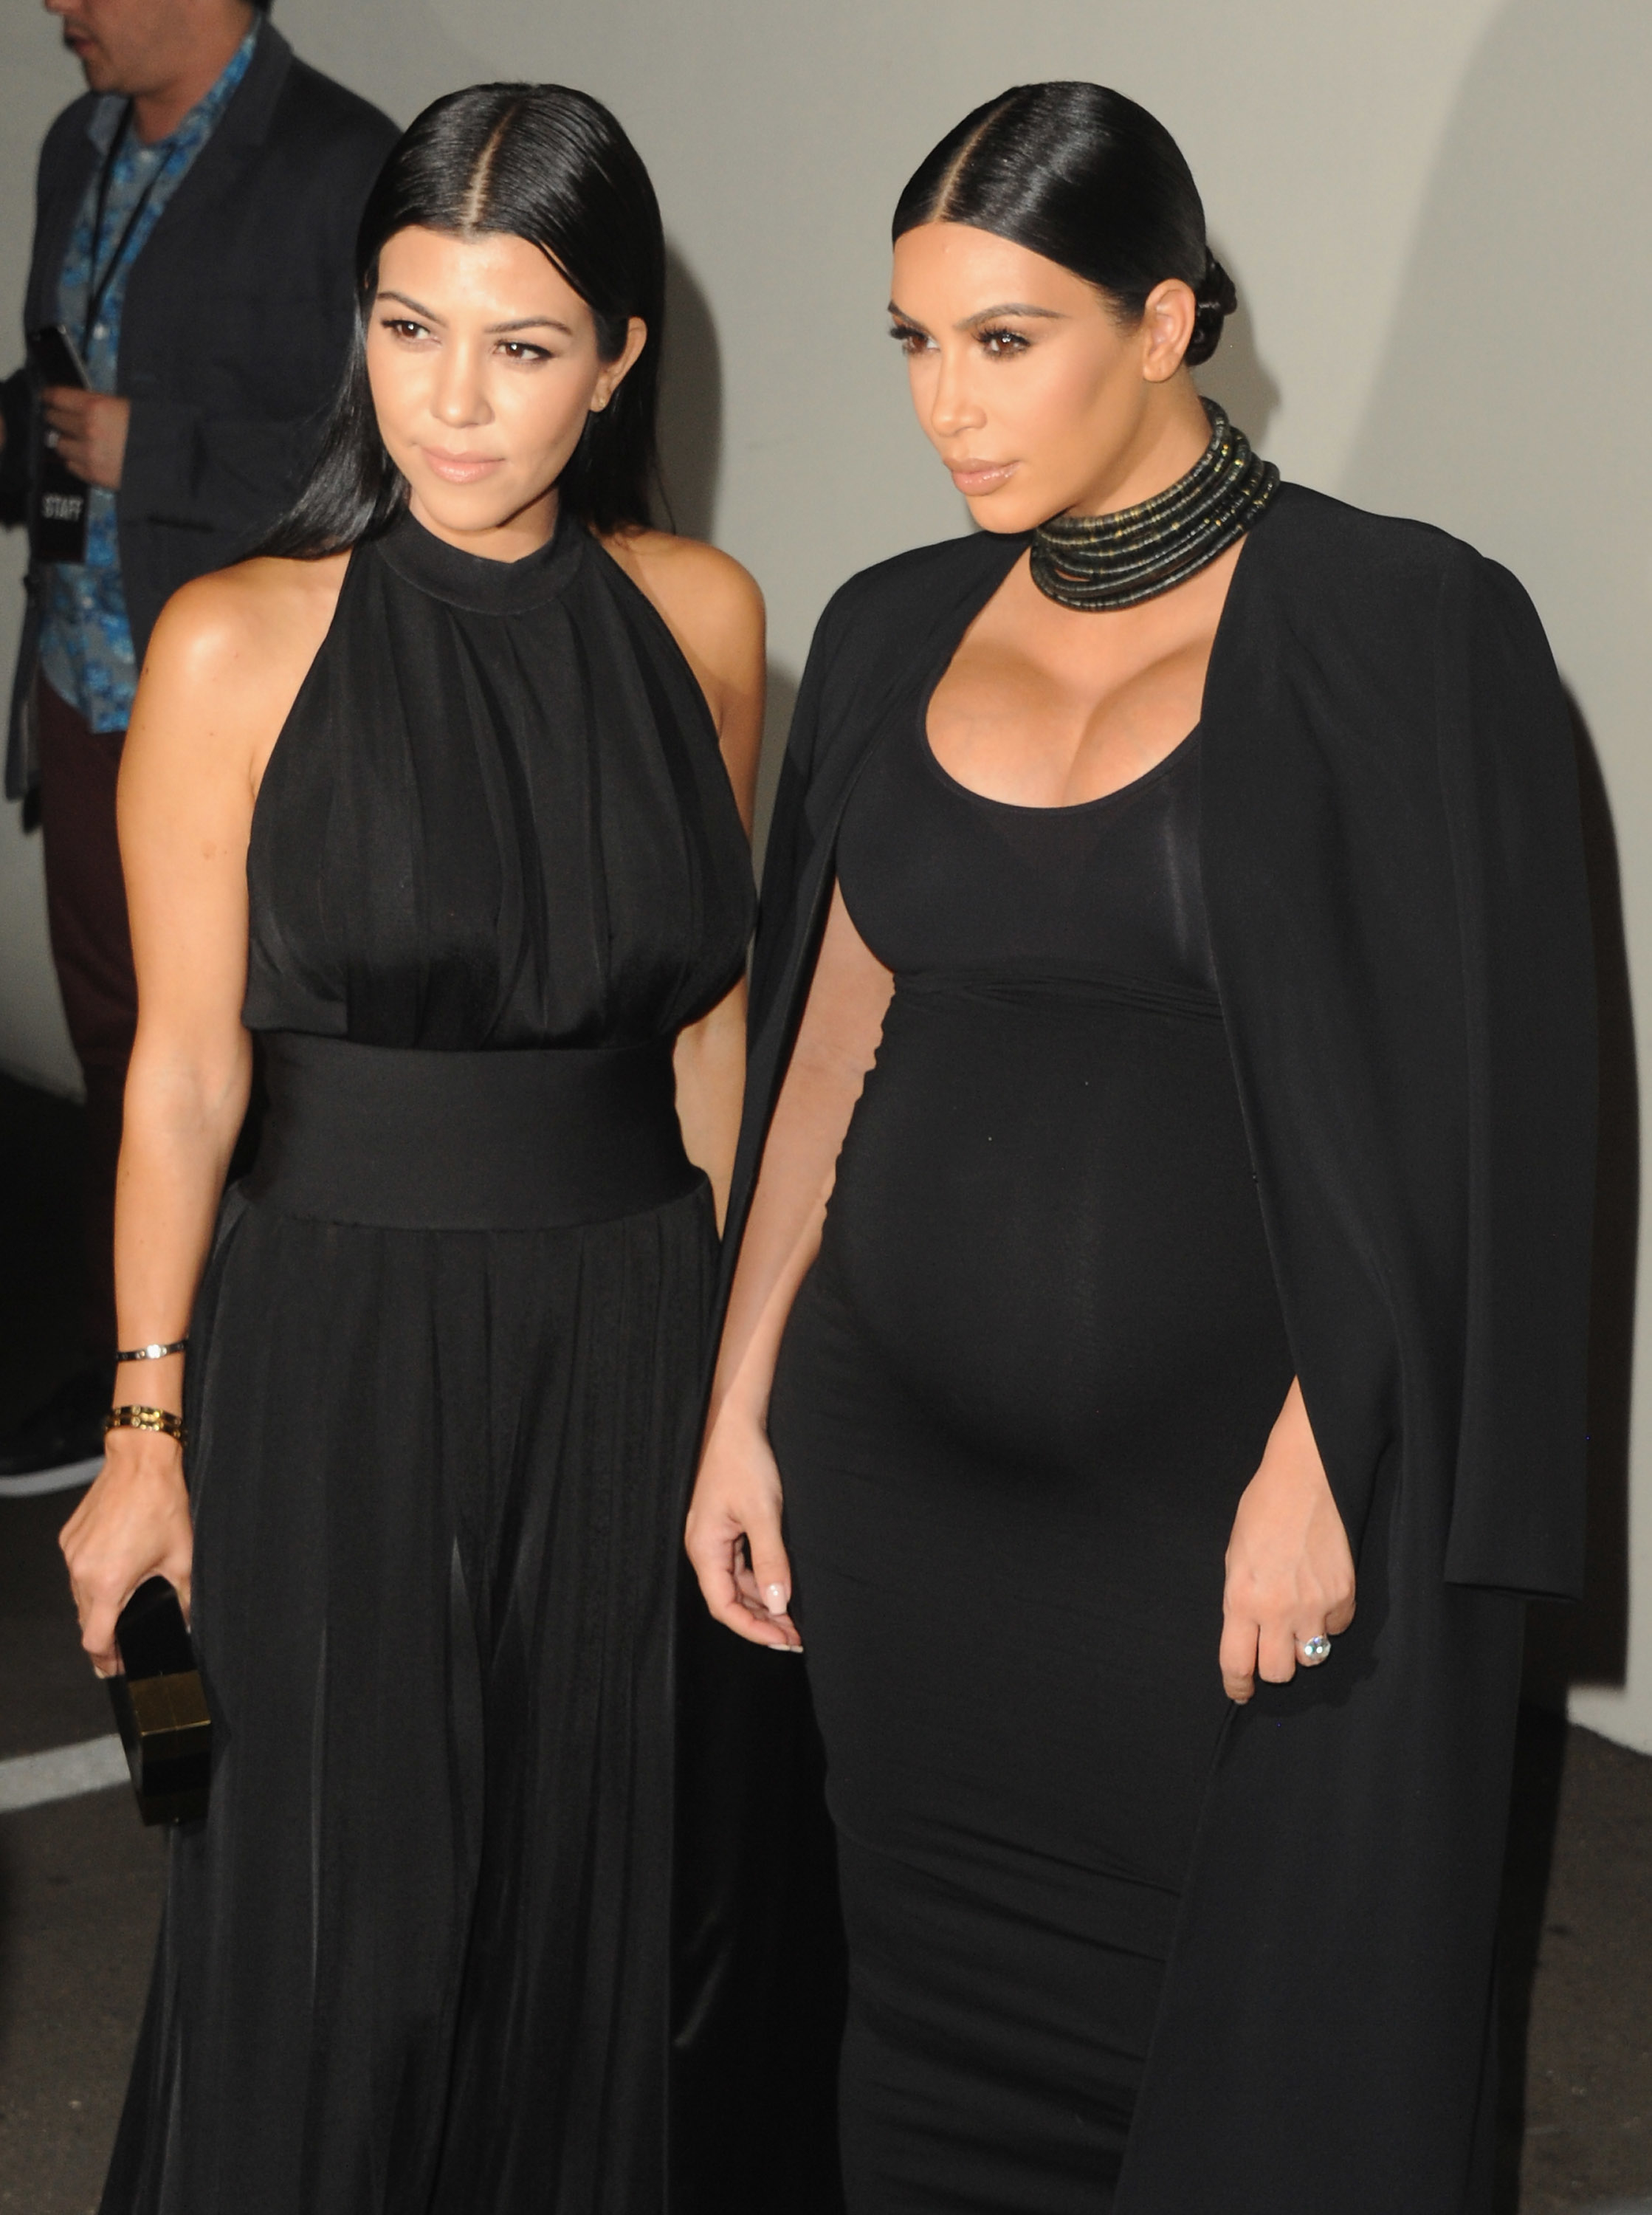 Close-up of Kourtney and Kim Kardashian at a media event